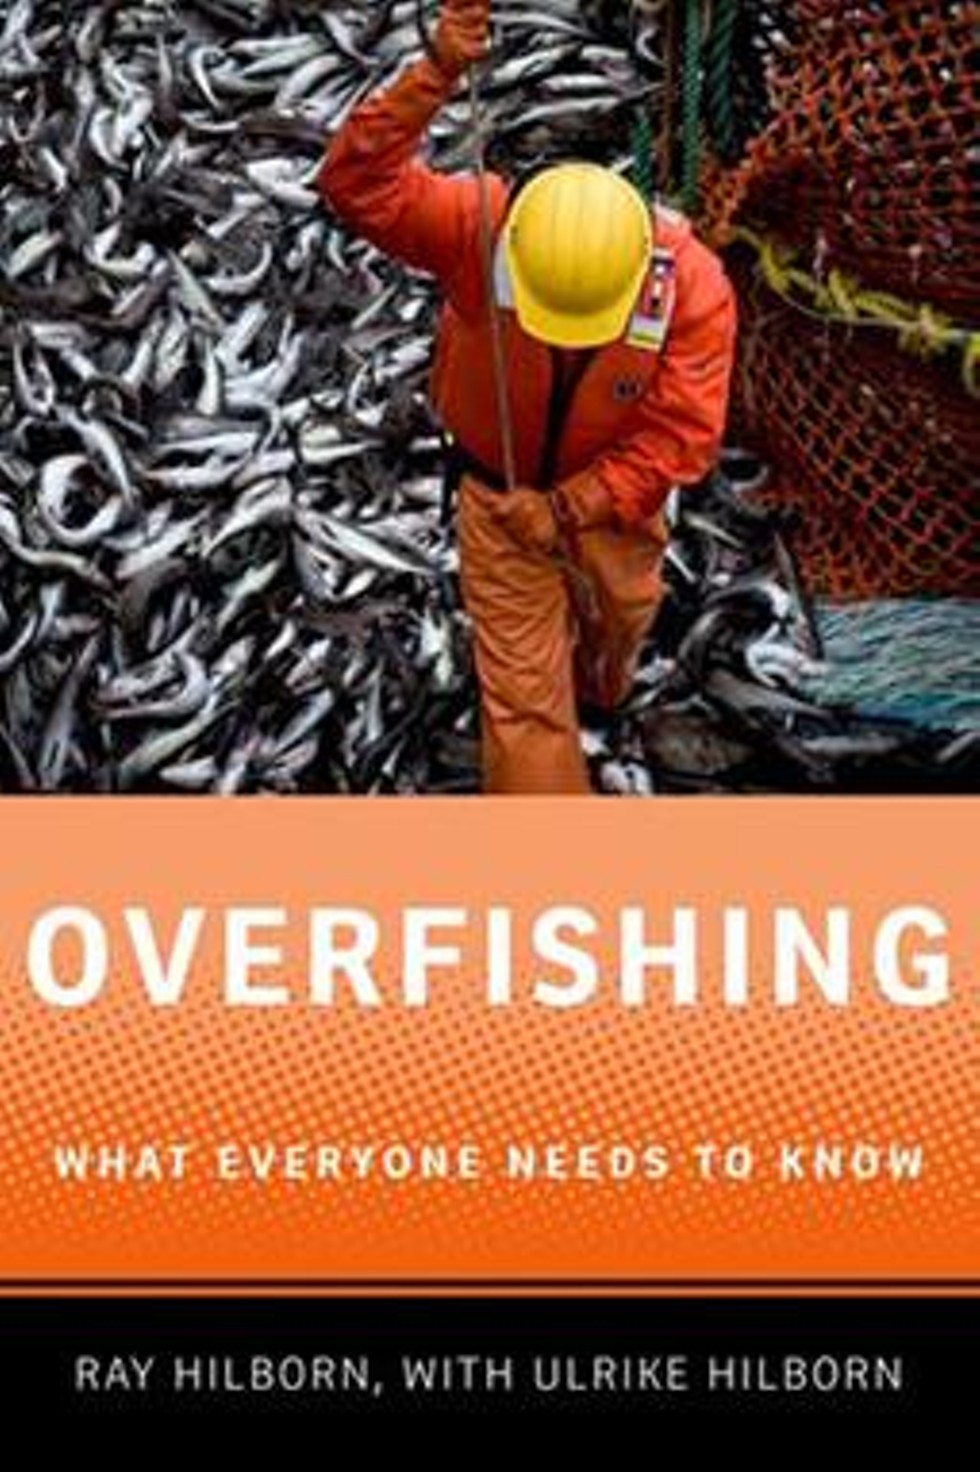 ev_overfishing.jpg